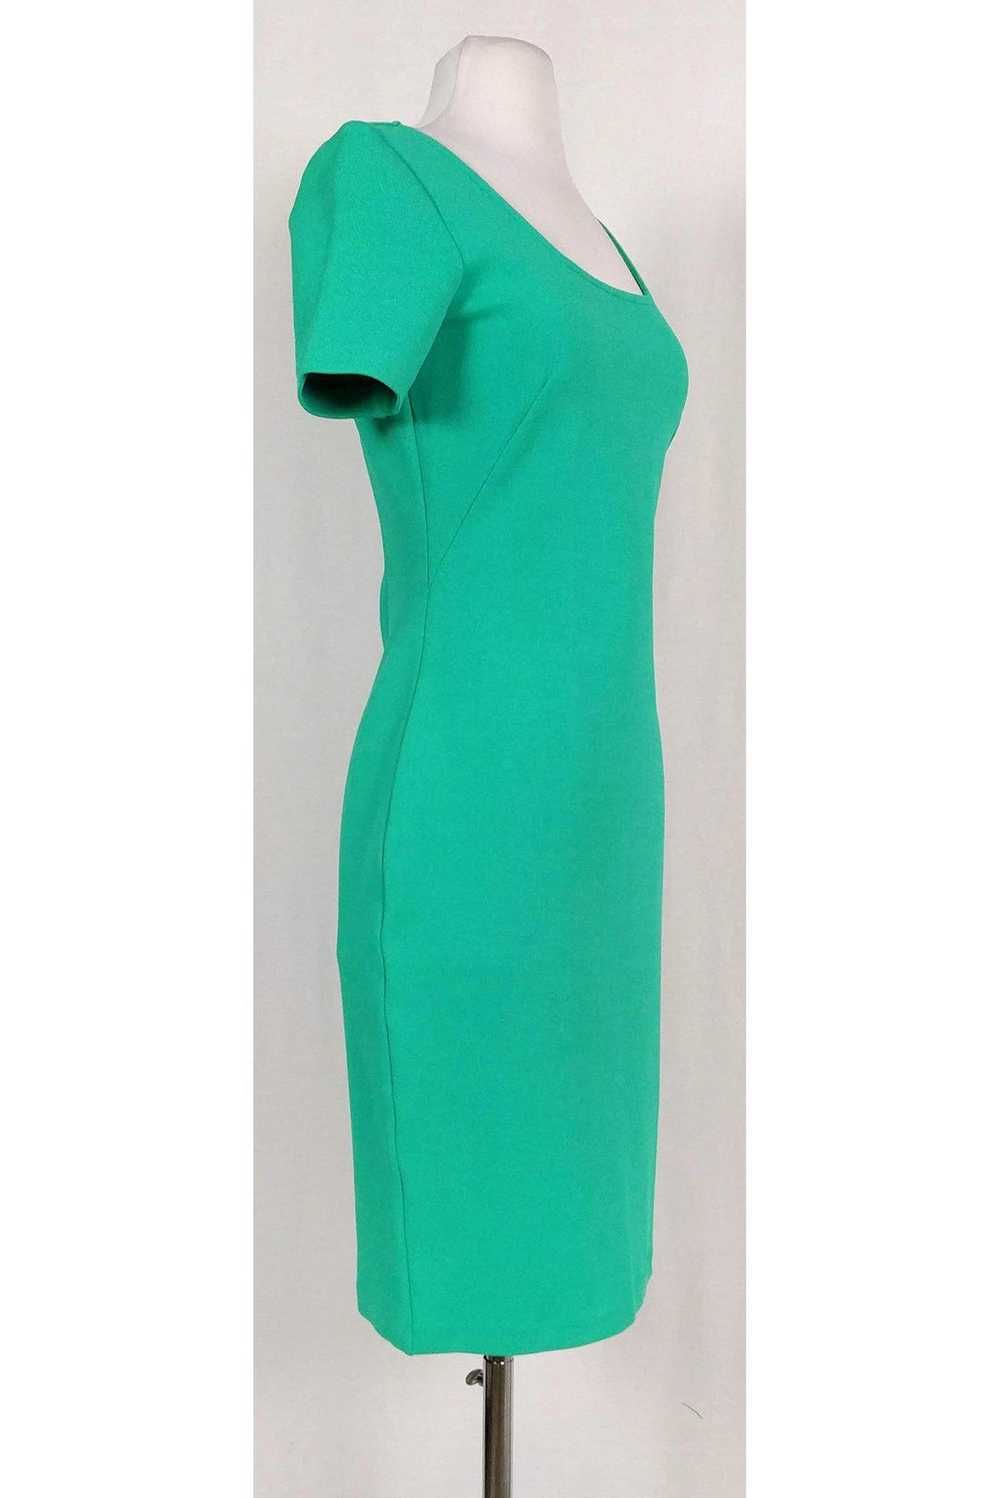 St. John - Seafoam Green Fitted Dress Sz 4 - image 2